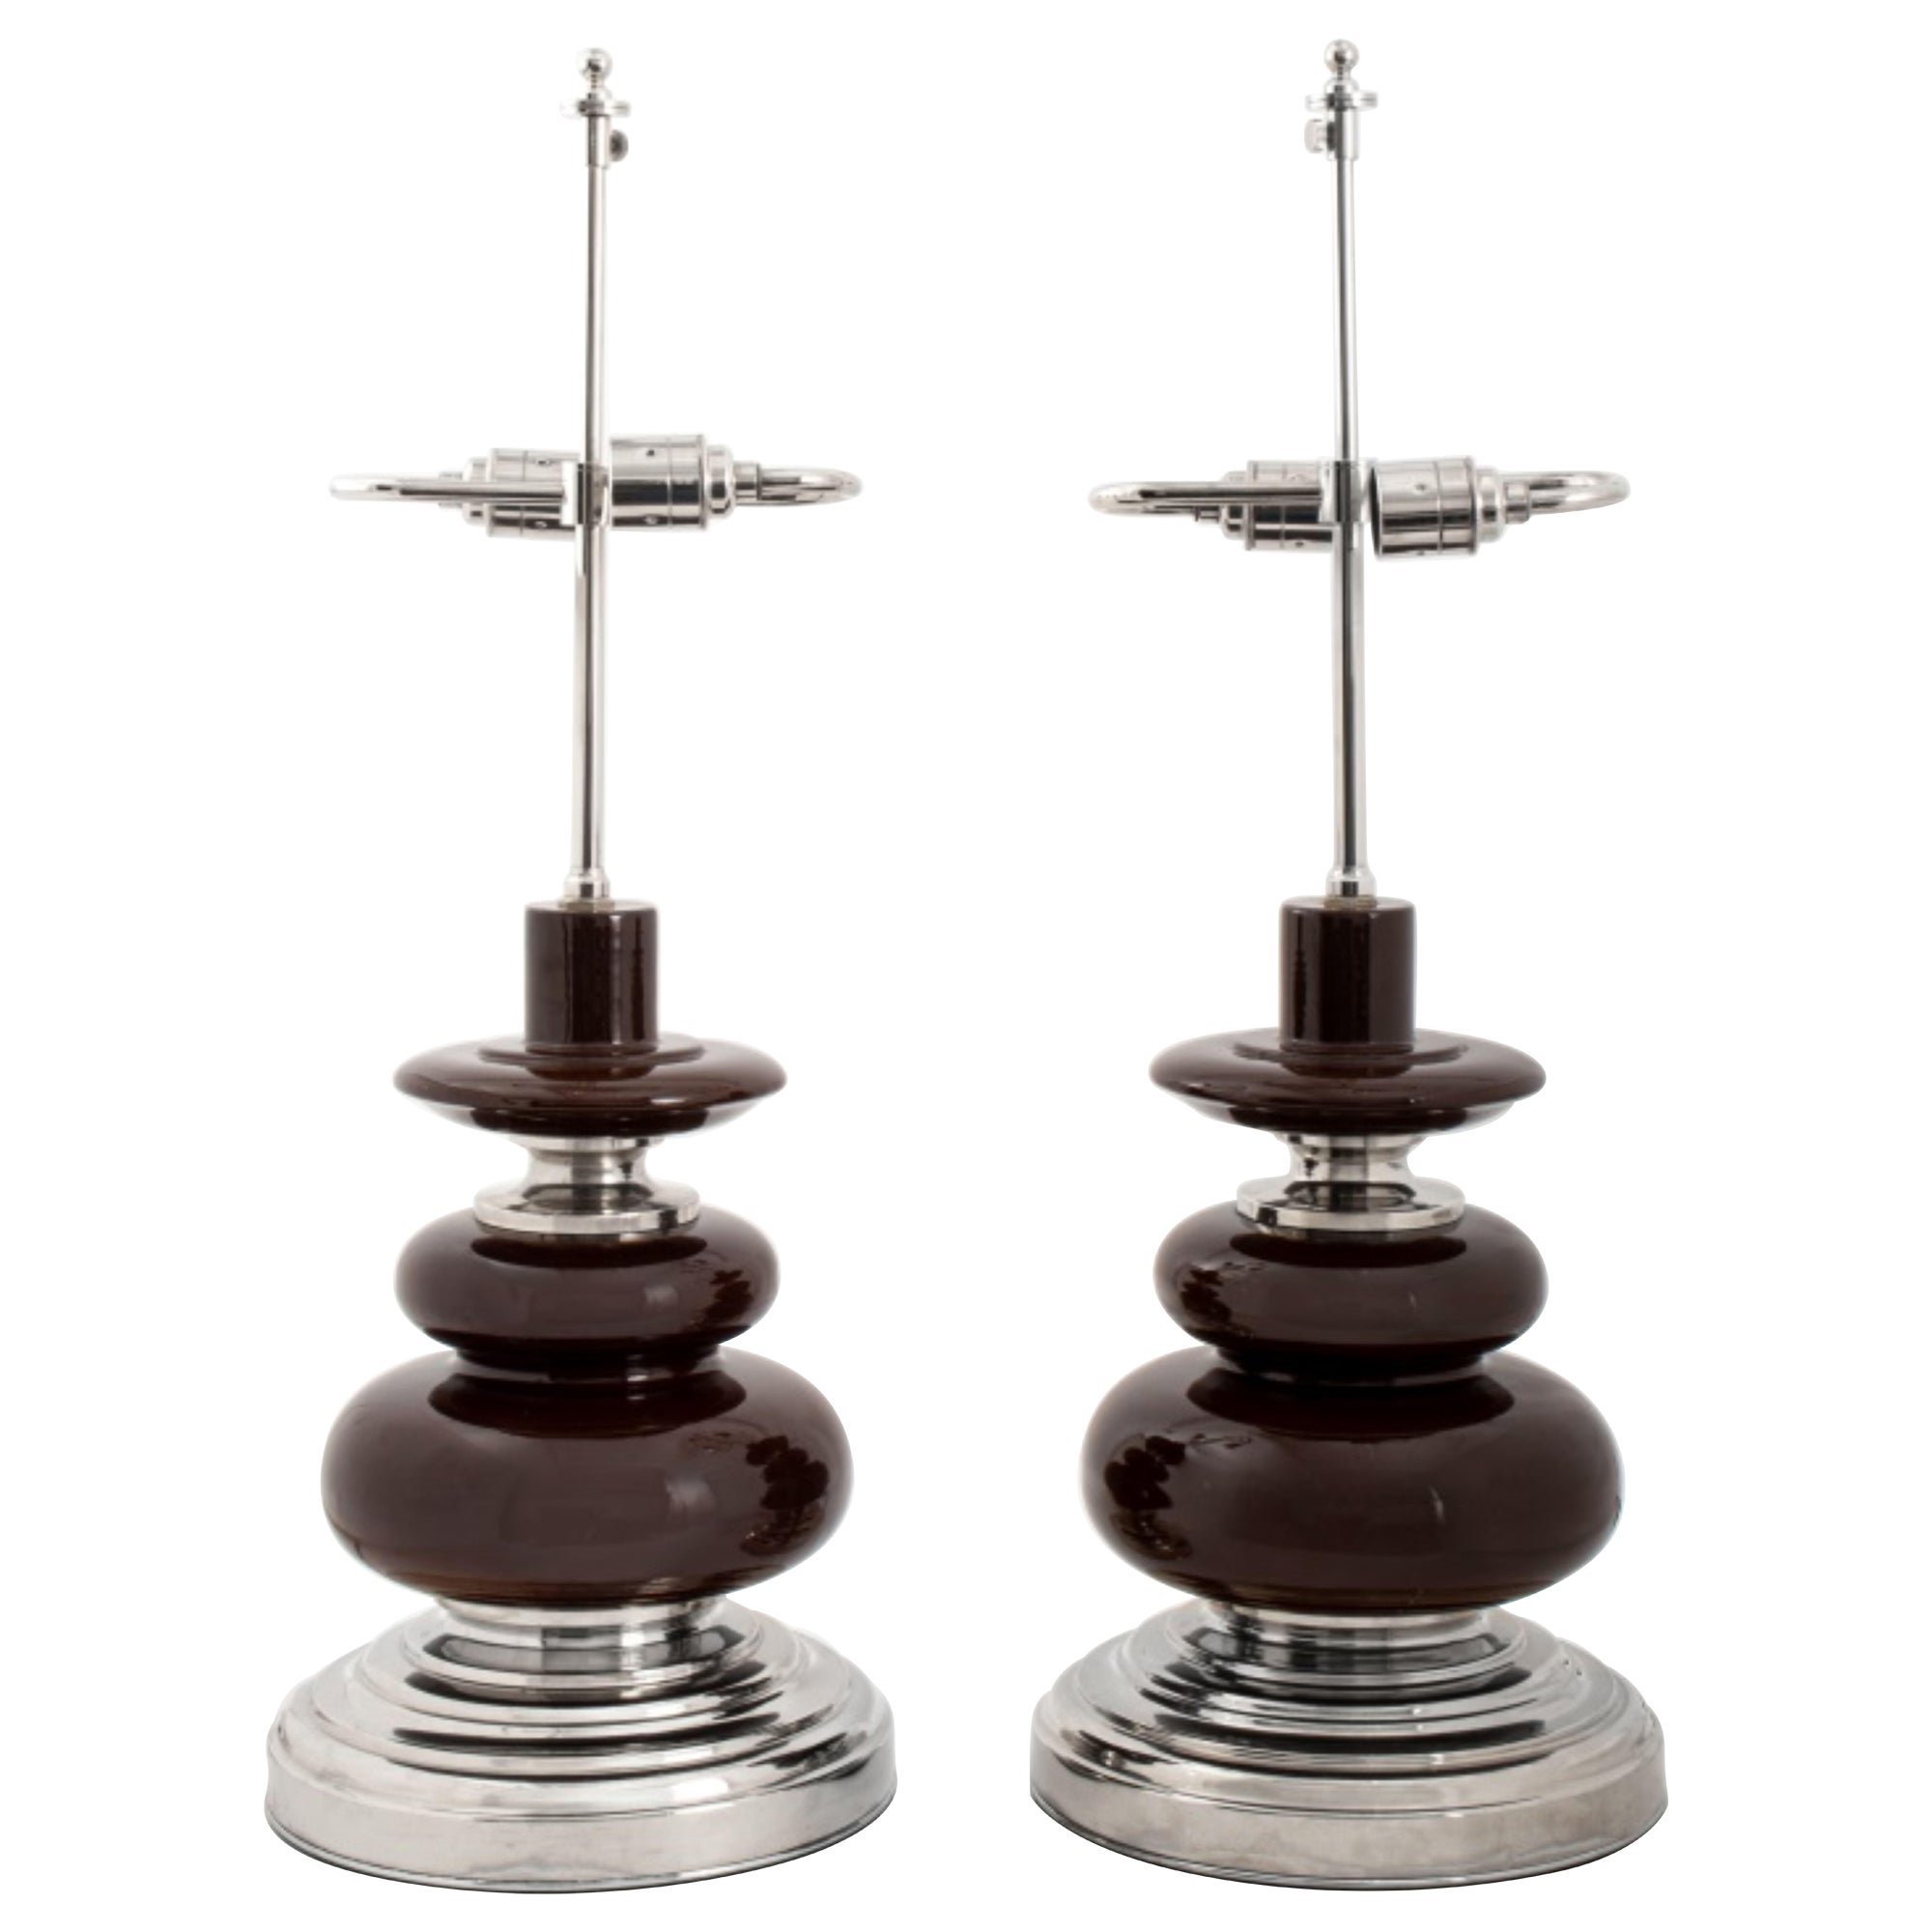 Pair of Spitzmiller Style Modern Ceramic Lamps